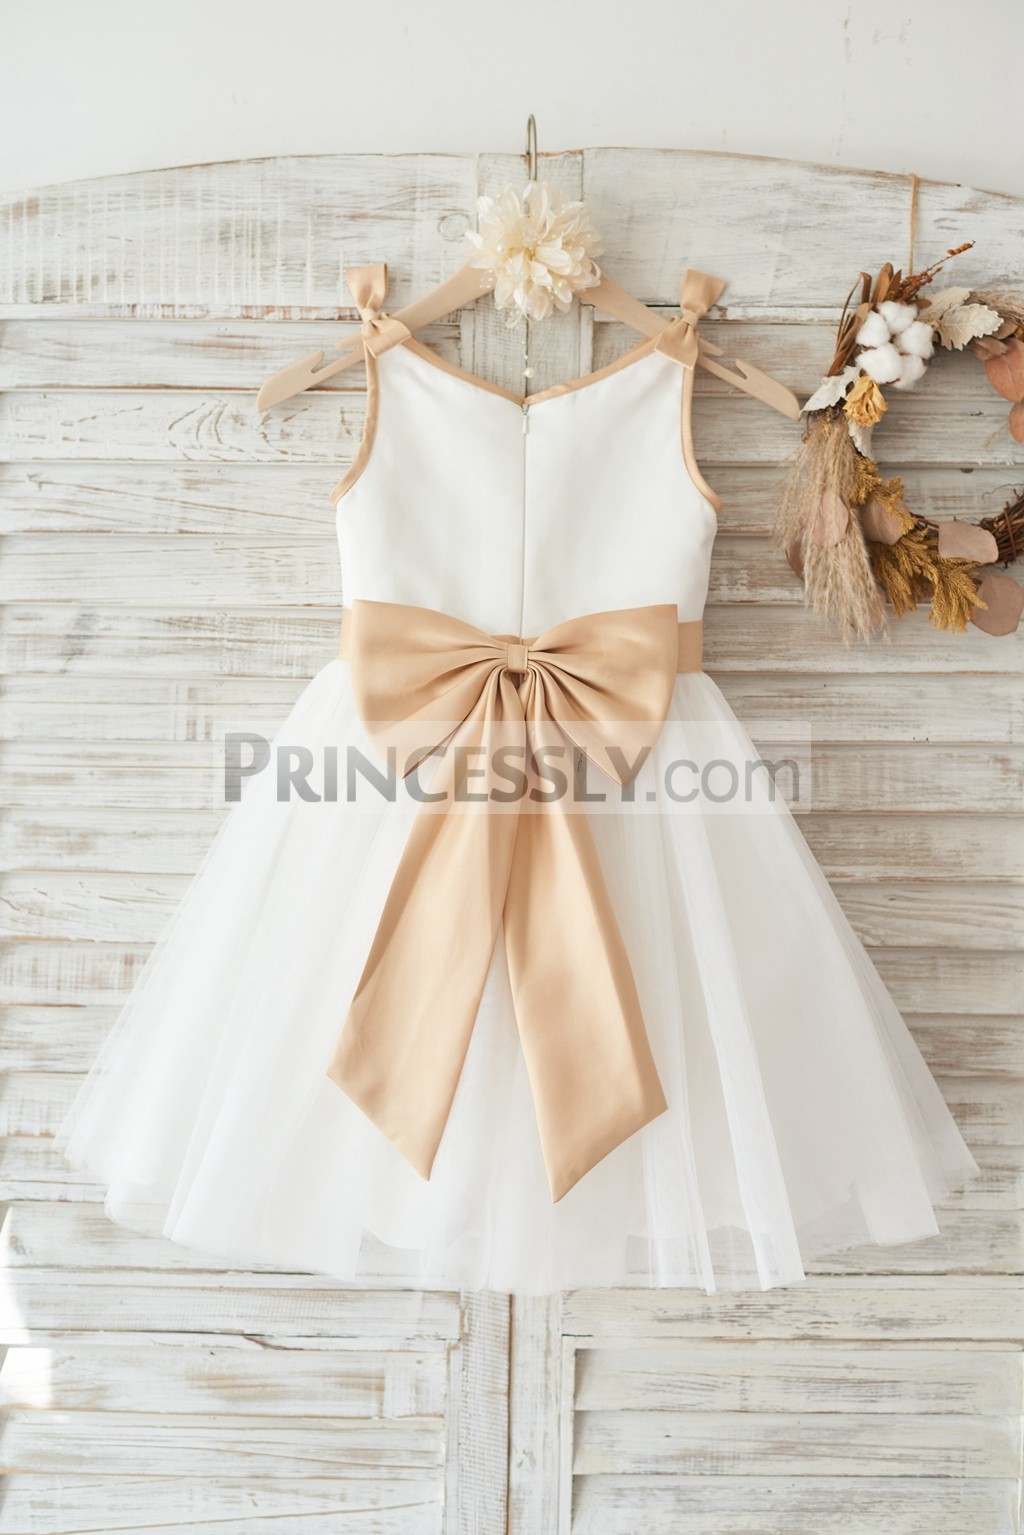 Ivory wedding baby girl dress with champagne satin edge / belt/ bows